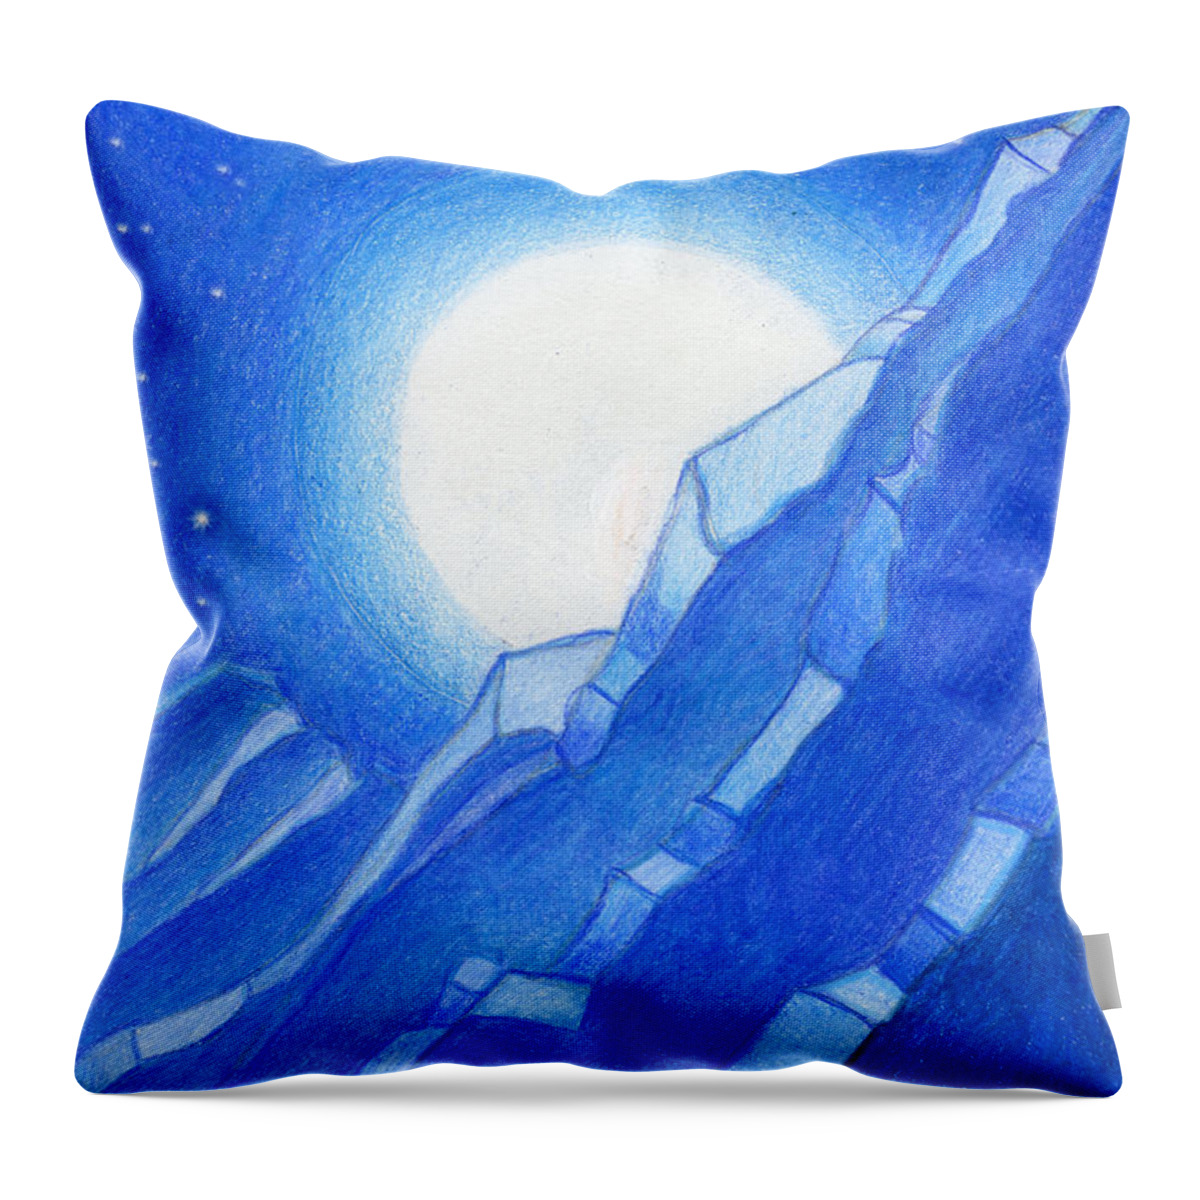 California Artist Throw Pillow featuring the drawing Moon Rising by Deborah Ann Good